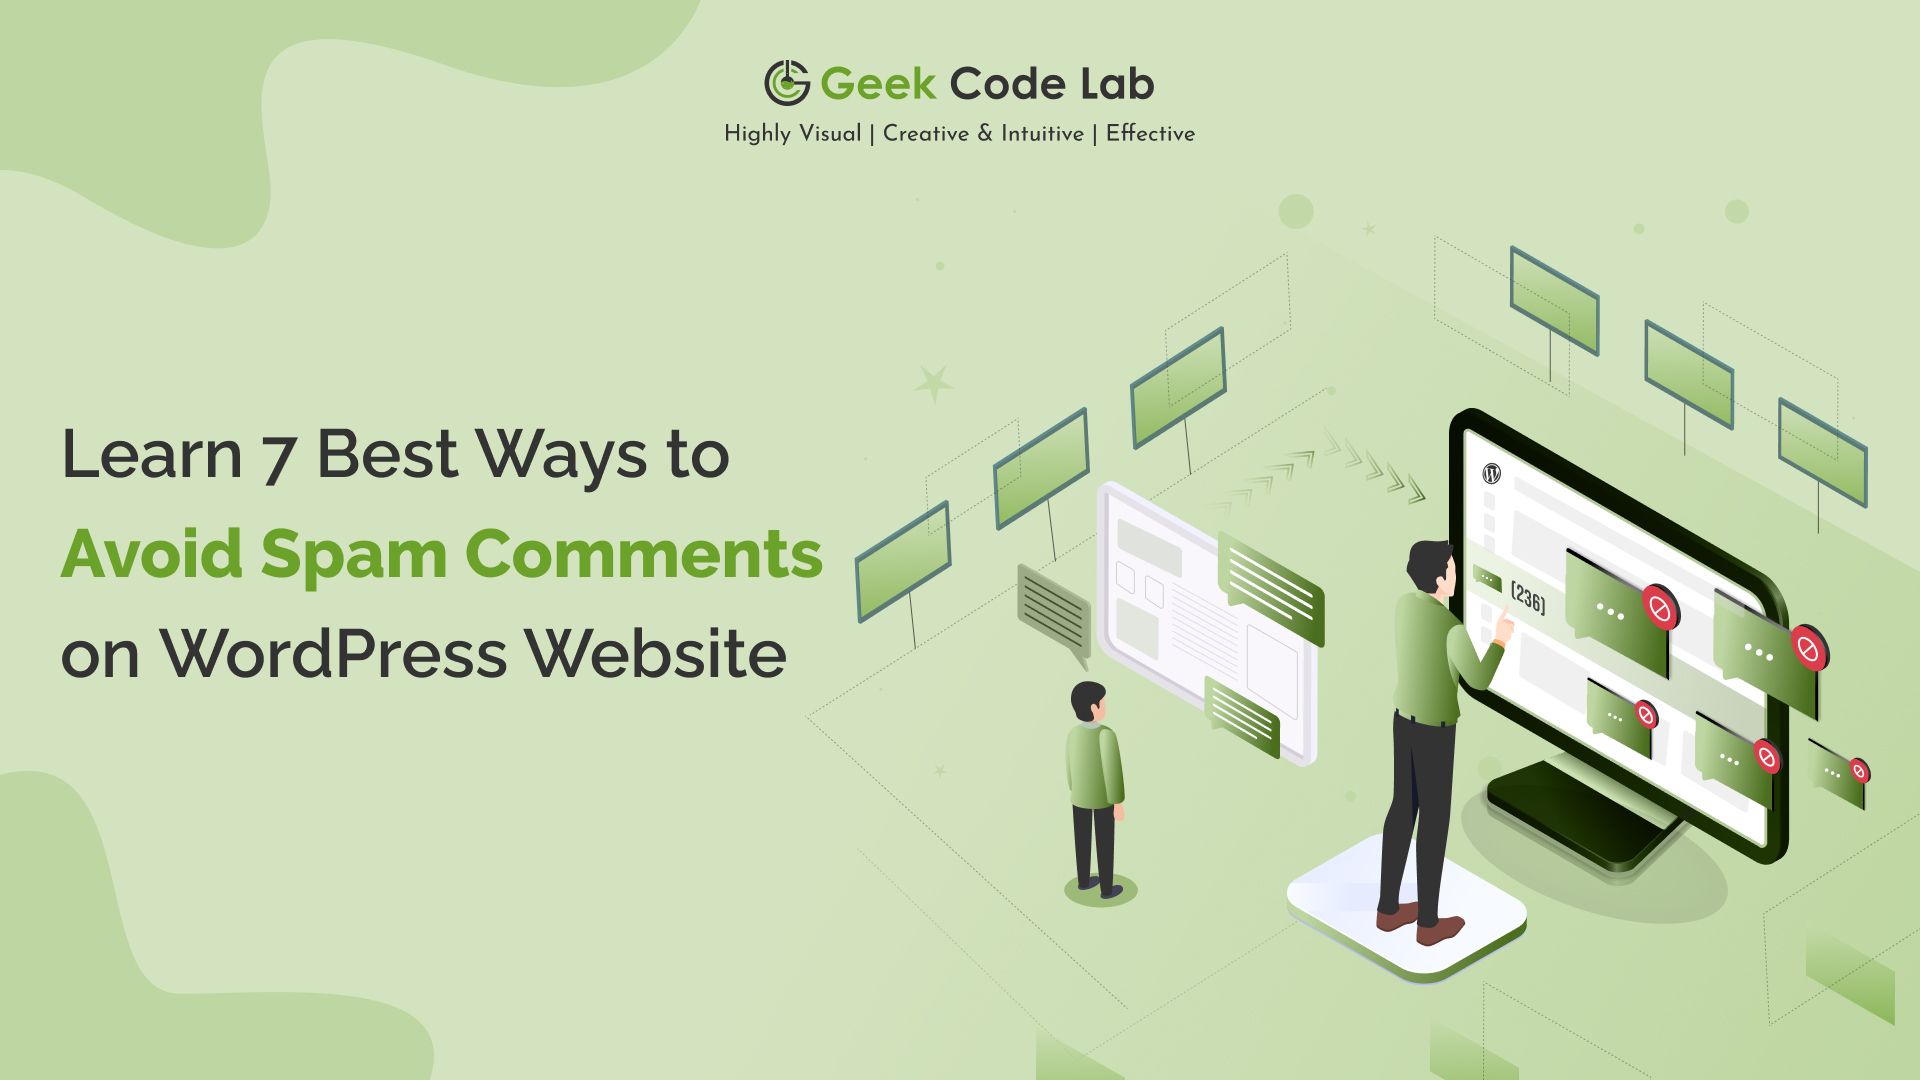 Learn 7 Best Ways to Avoid Spam Comments on WordPress Website